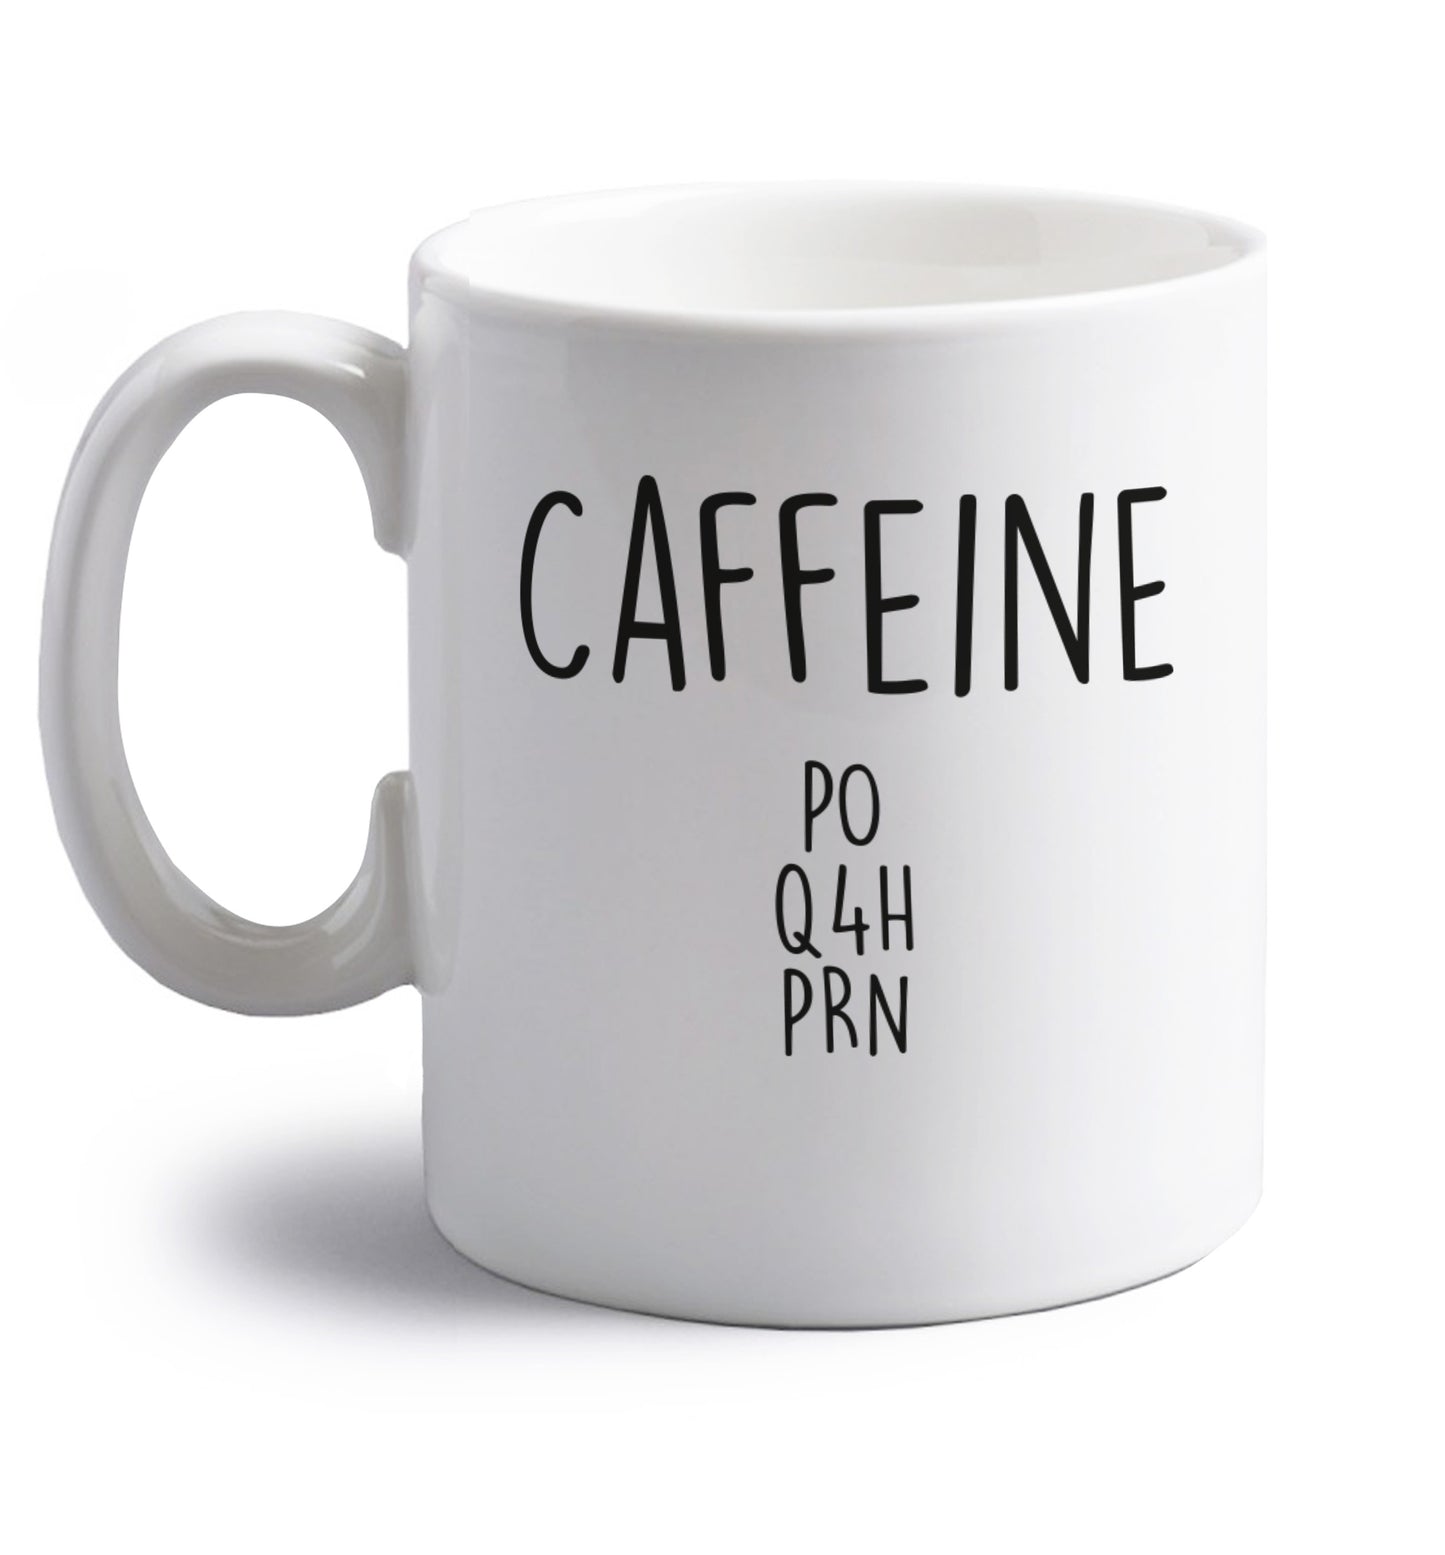 Caffeine PO Q4H PRN right handed white ceramic mug 